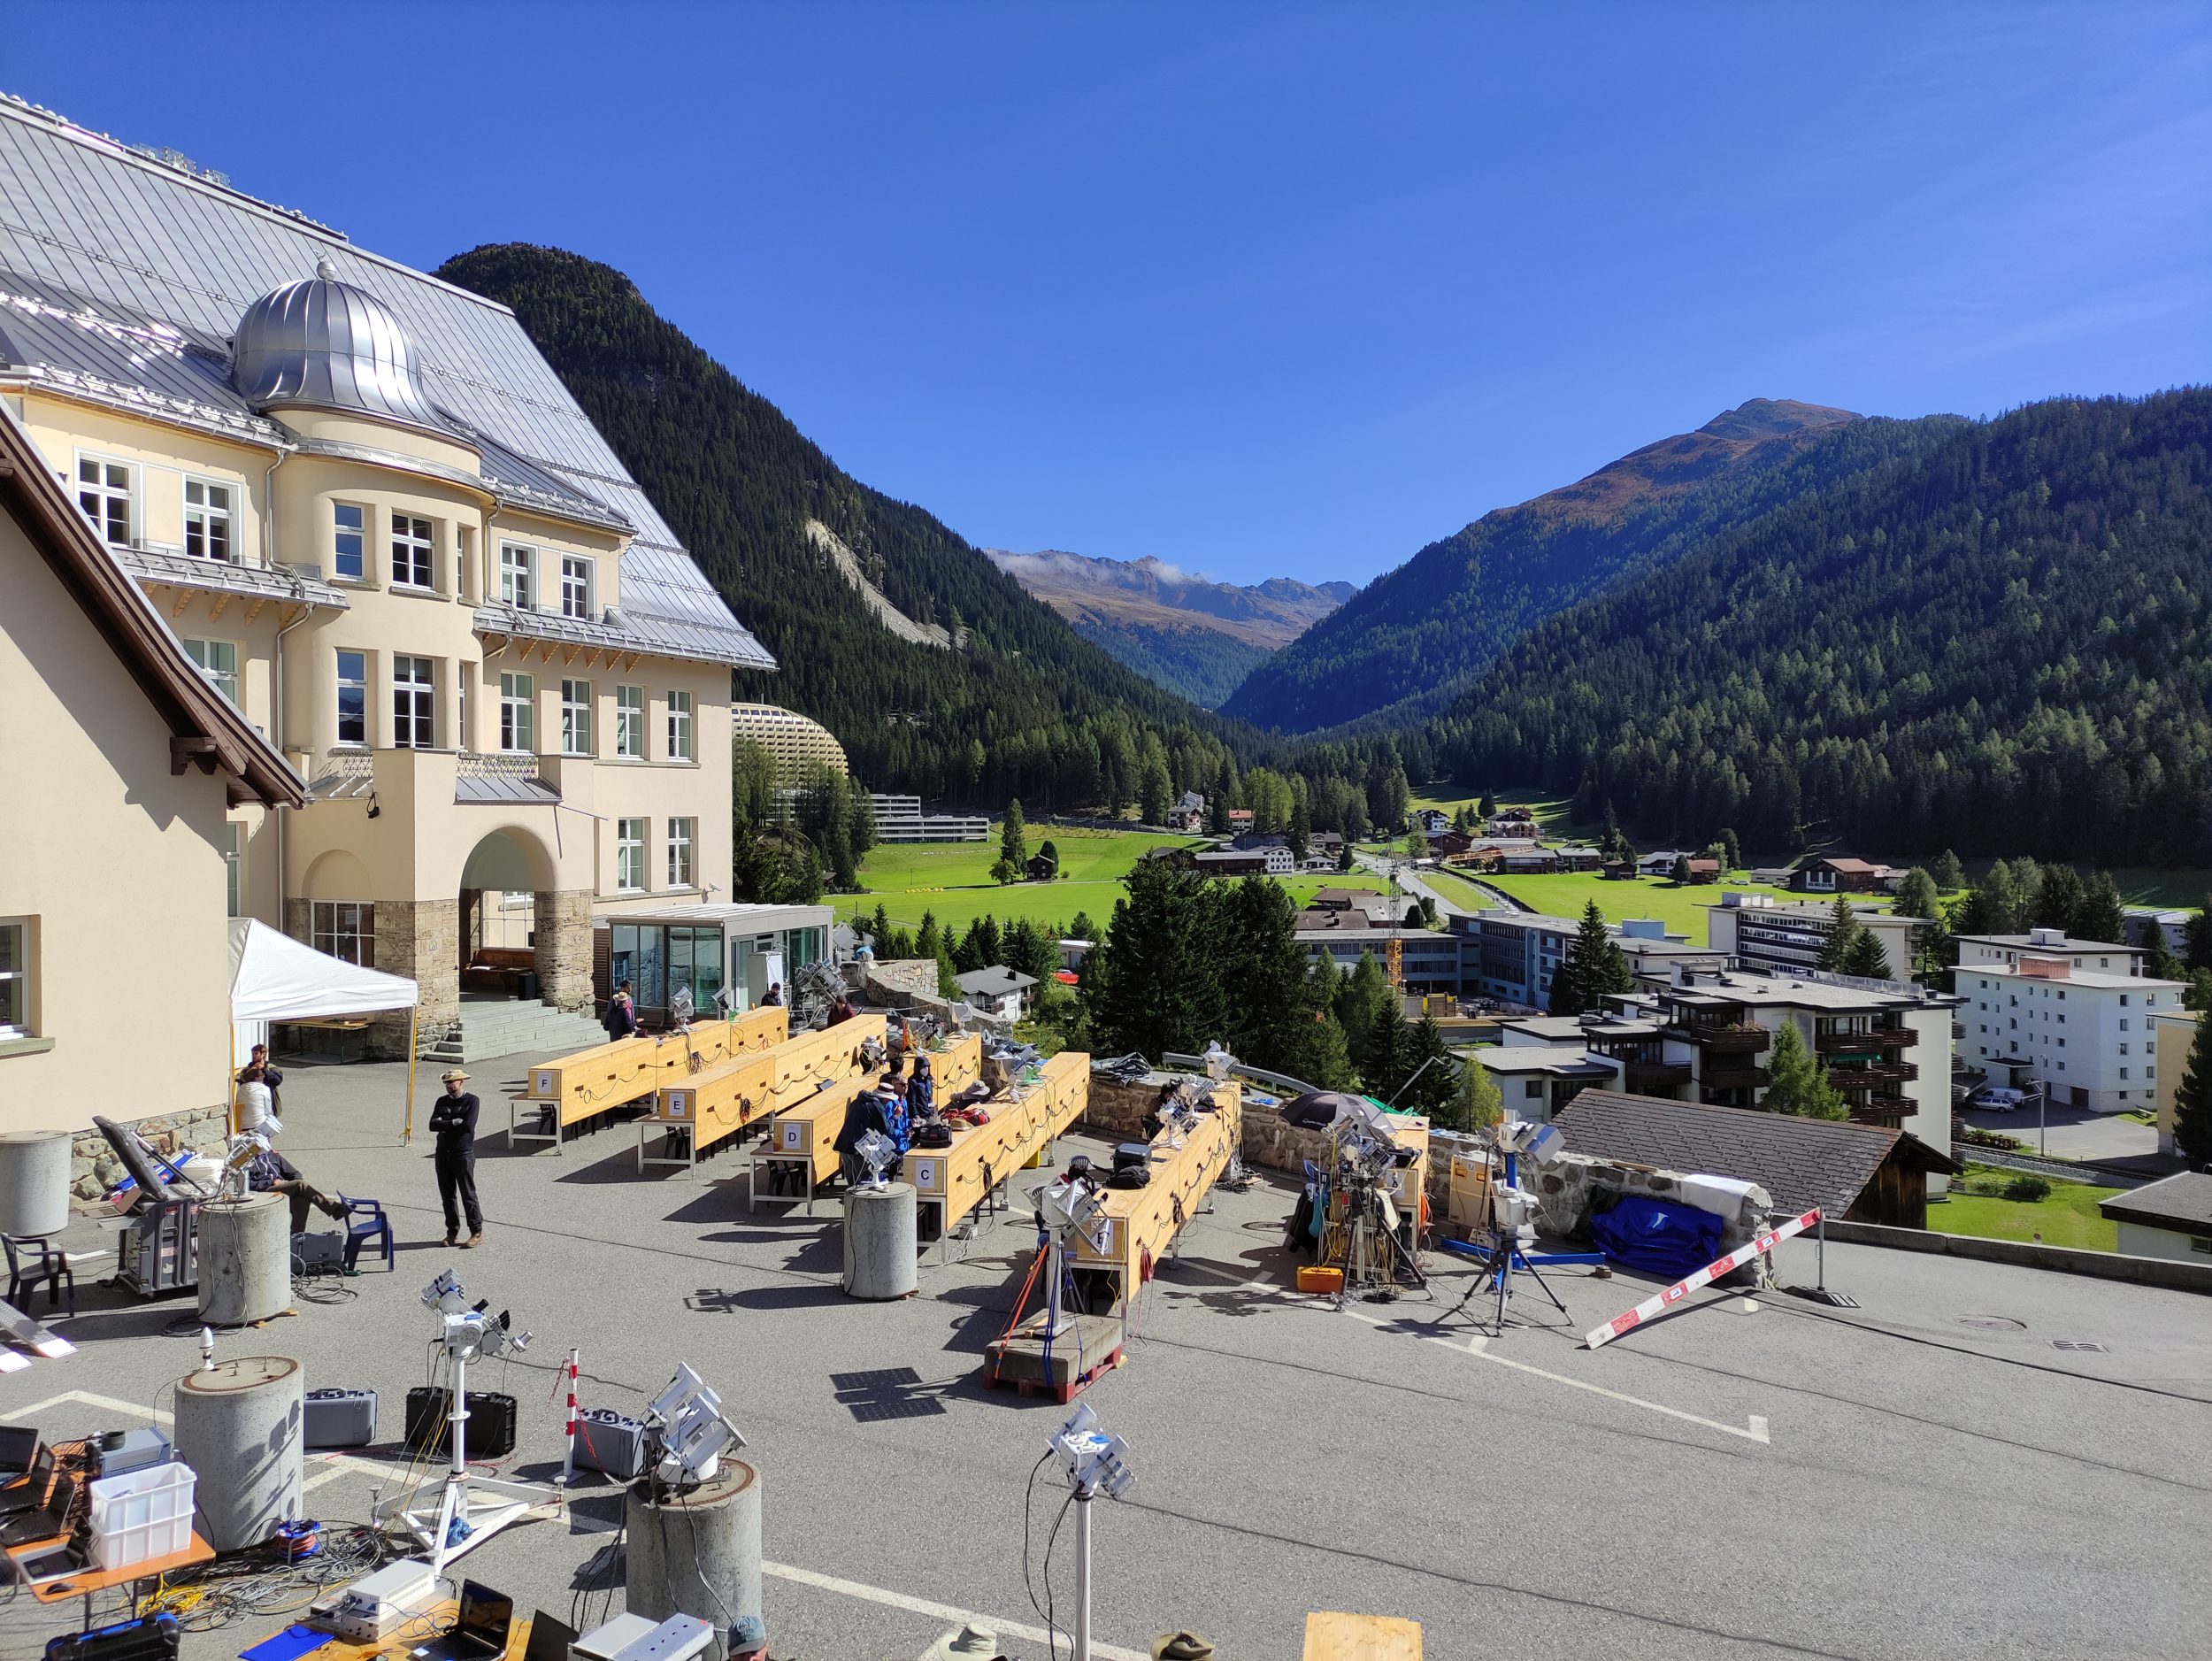 The International Pyrheliometer Comparison takes place at the Physikalisch-Meteorologisches Observatorium Davos, Switzerland.